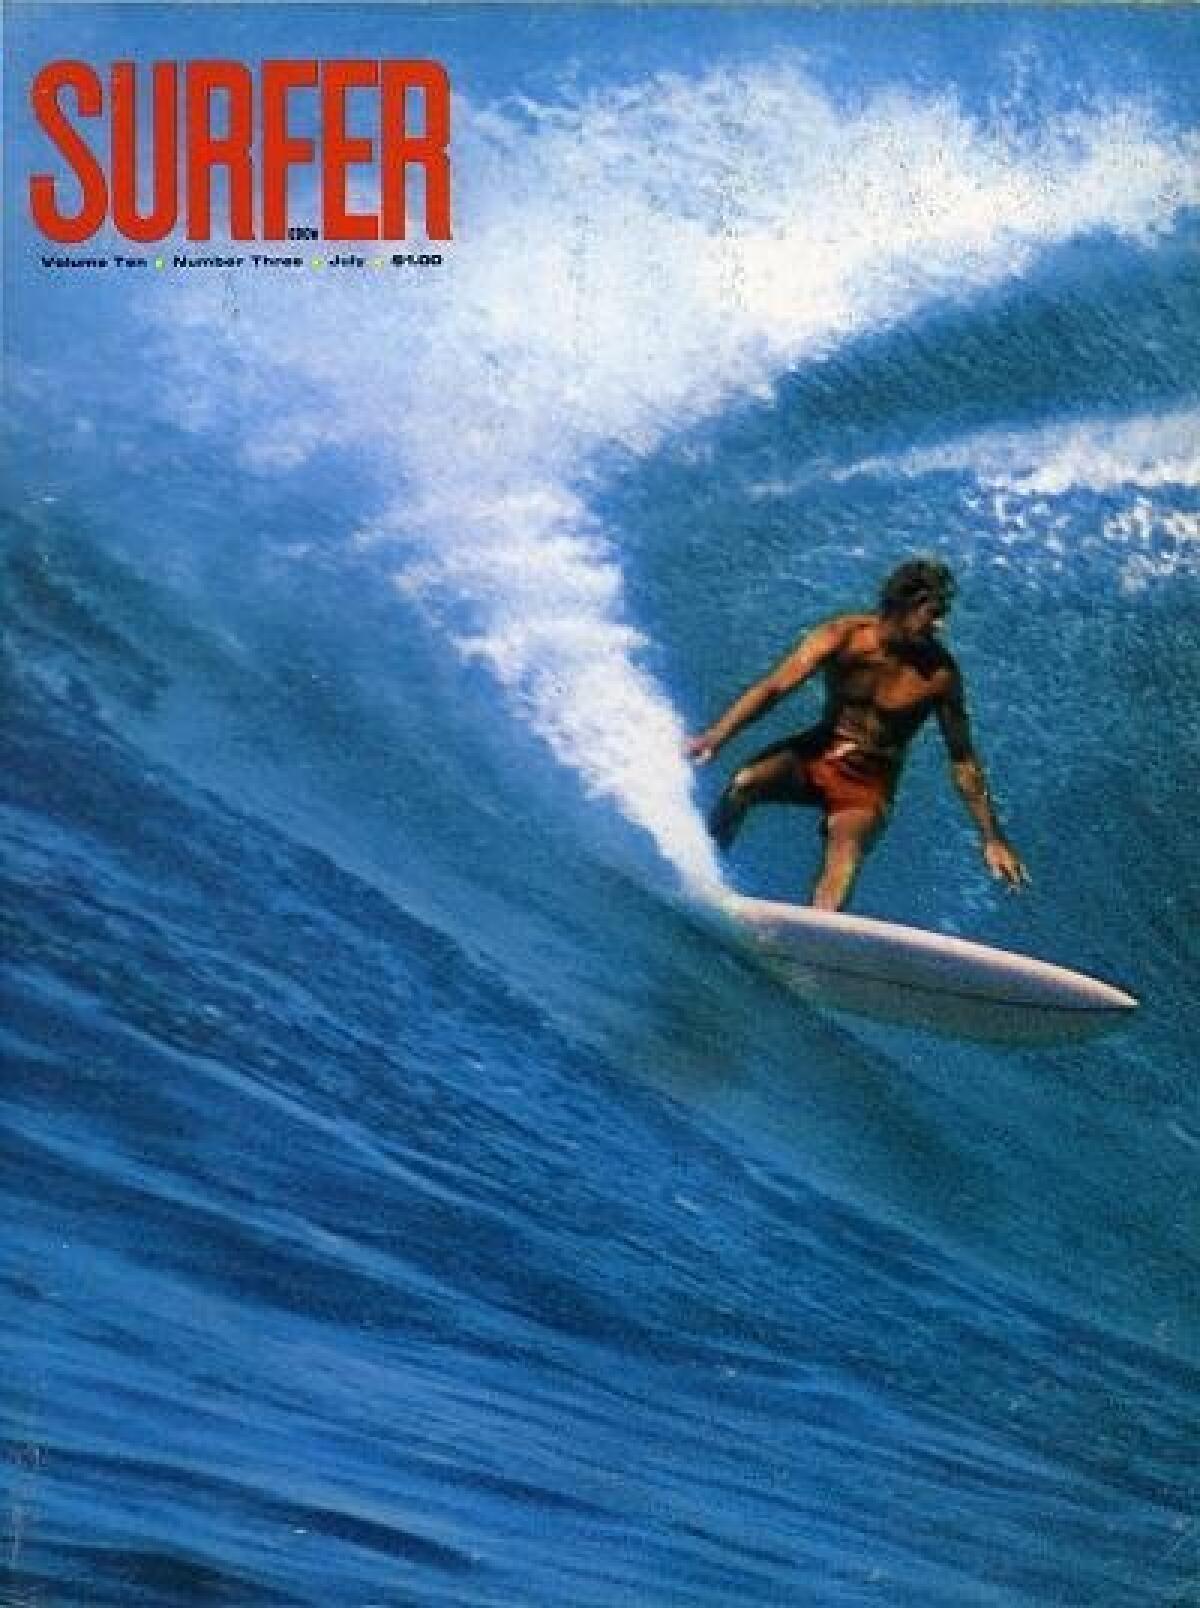 Surfer magazine cover.
